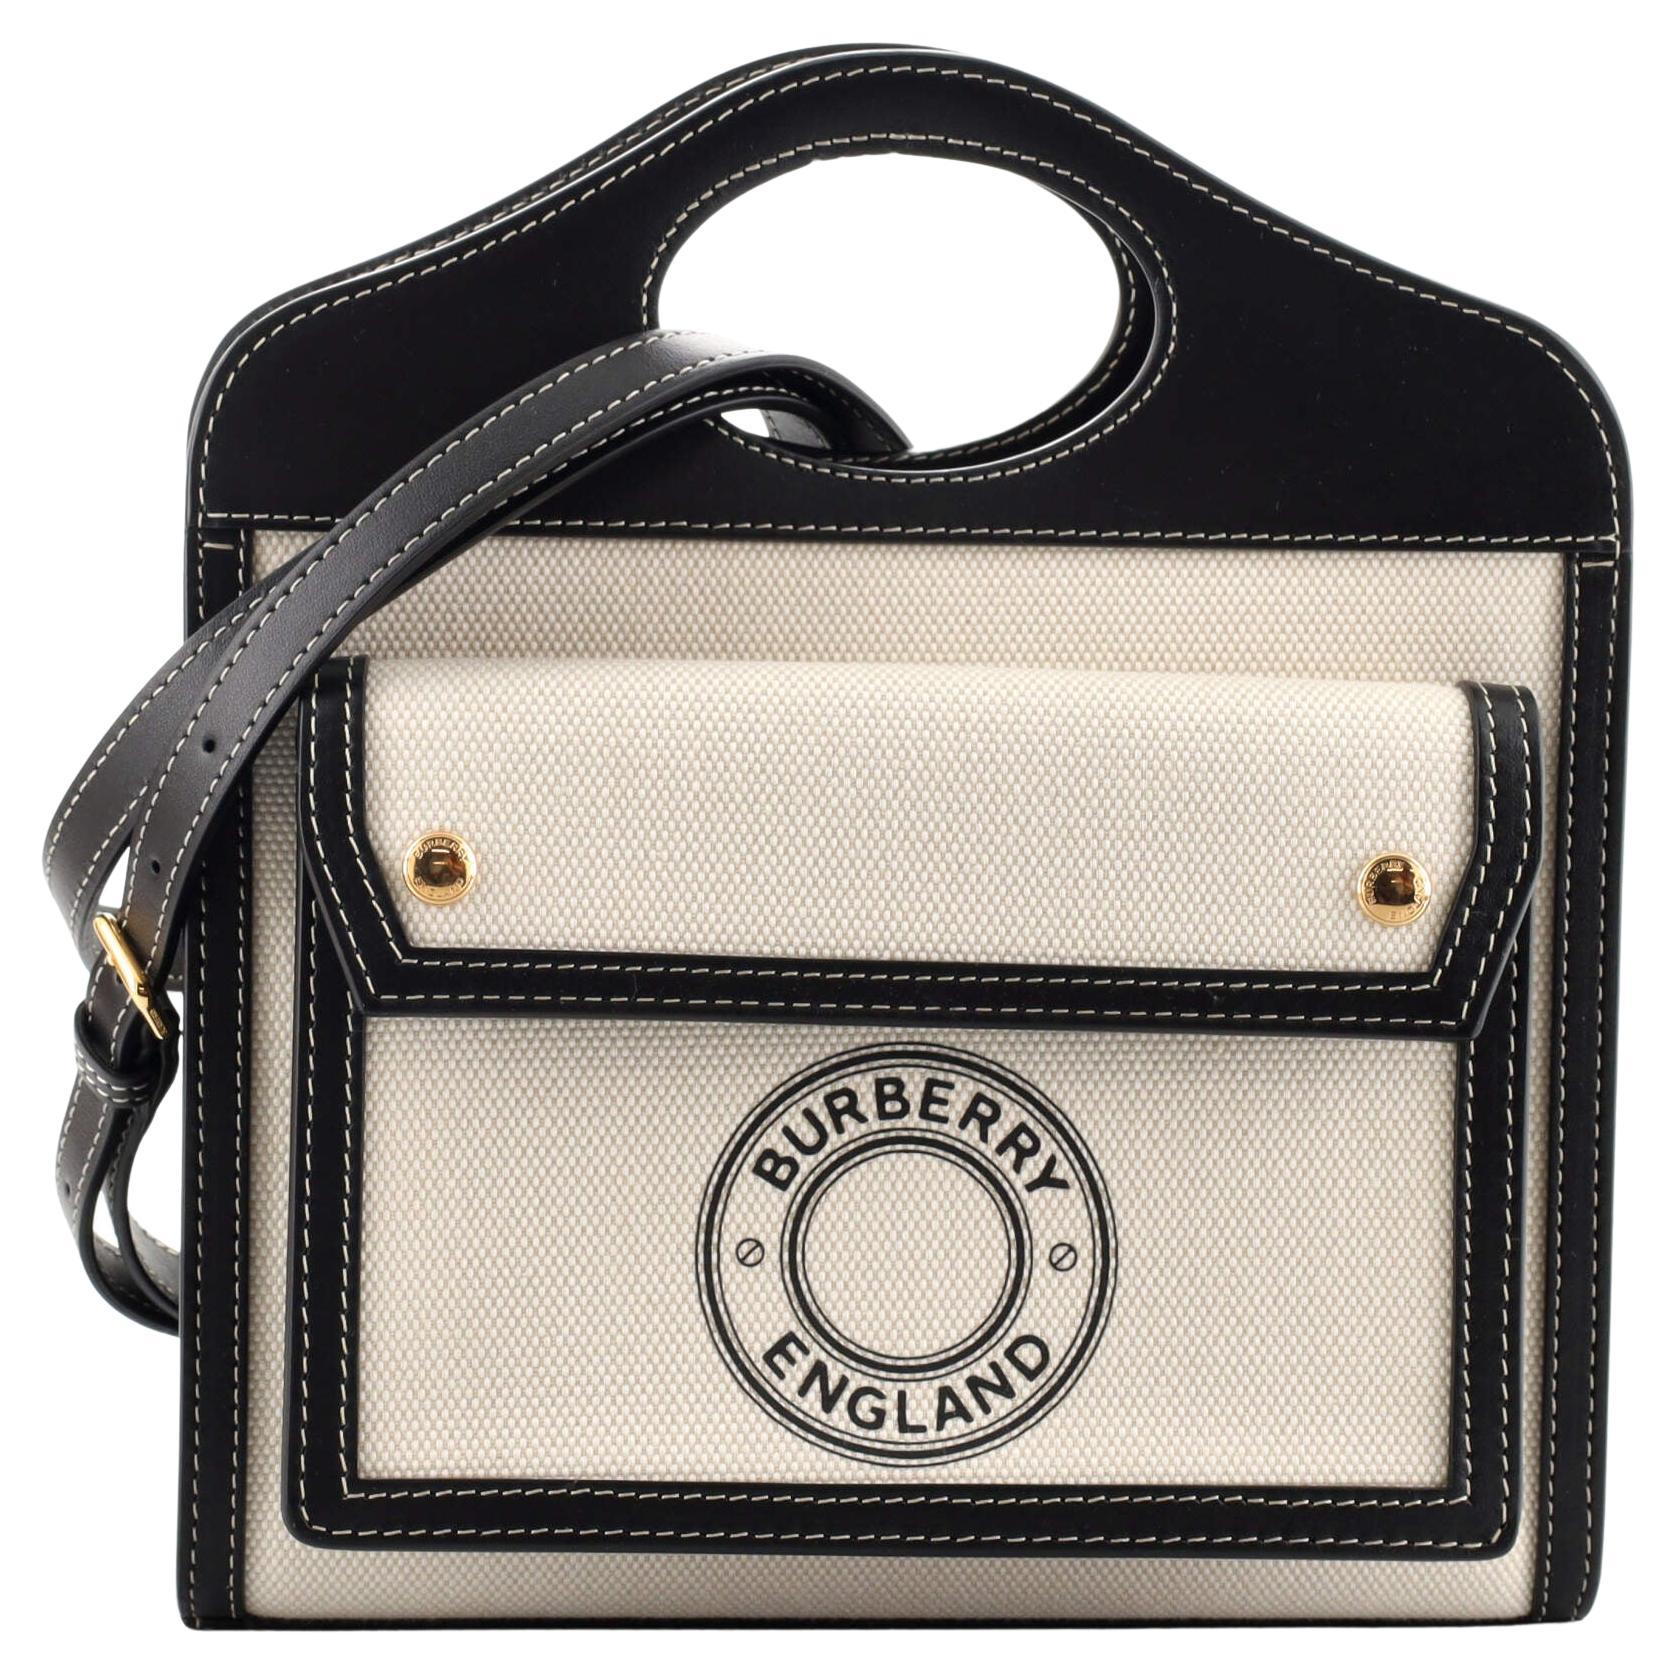 Vintage Burberry mini tote bag, handbag and coin purse For Sale at 1stDibs